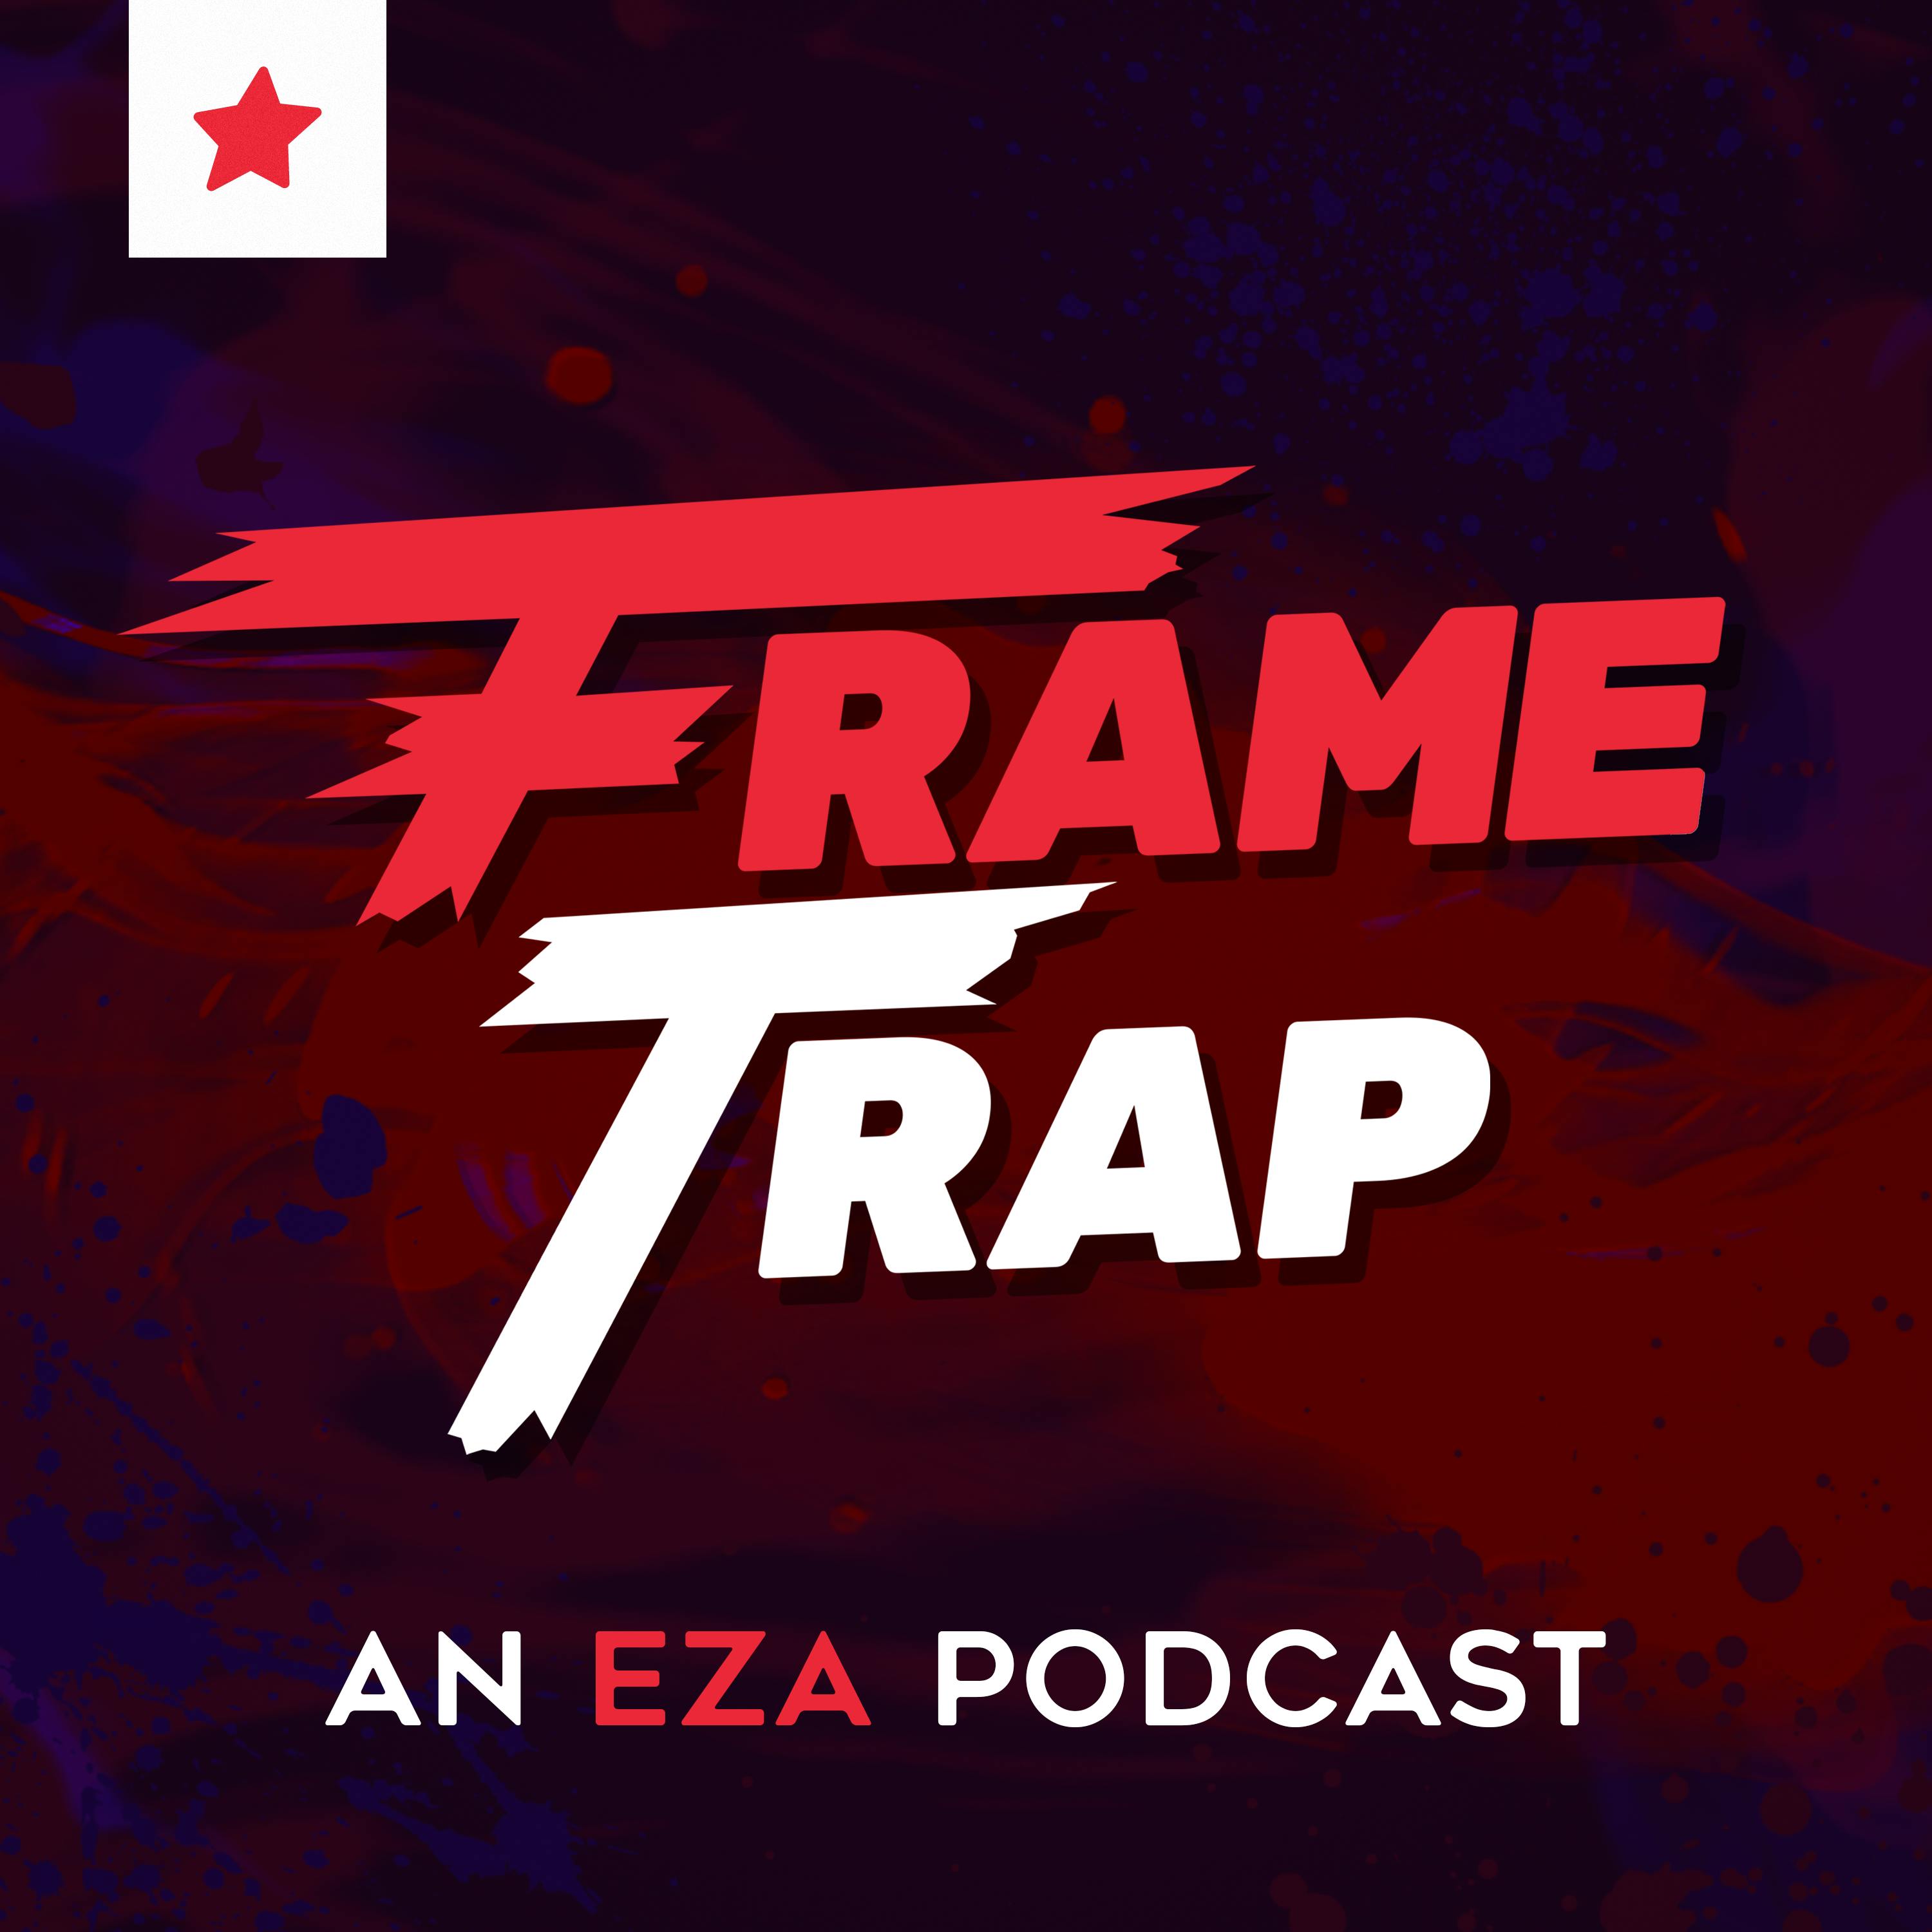 Frame Trap - Episode 188 "Ghost N' Aliens"